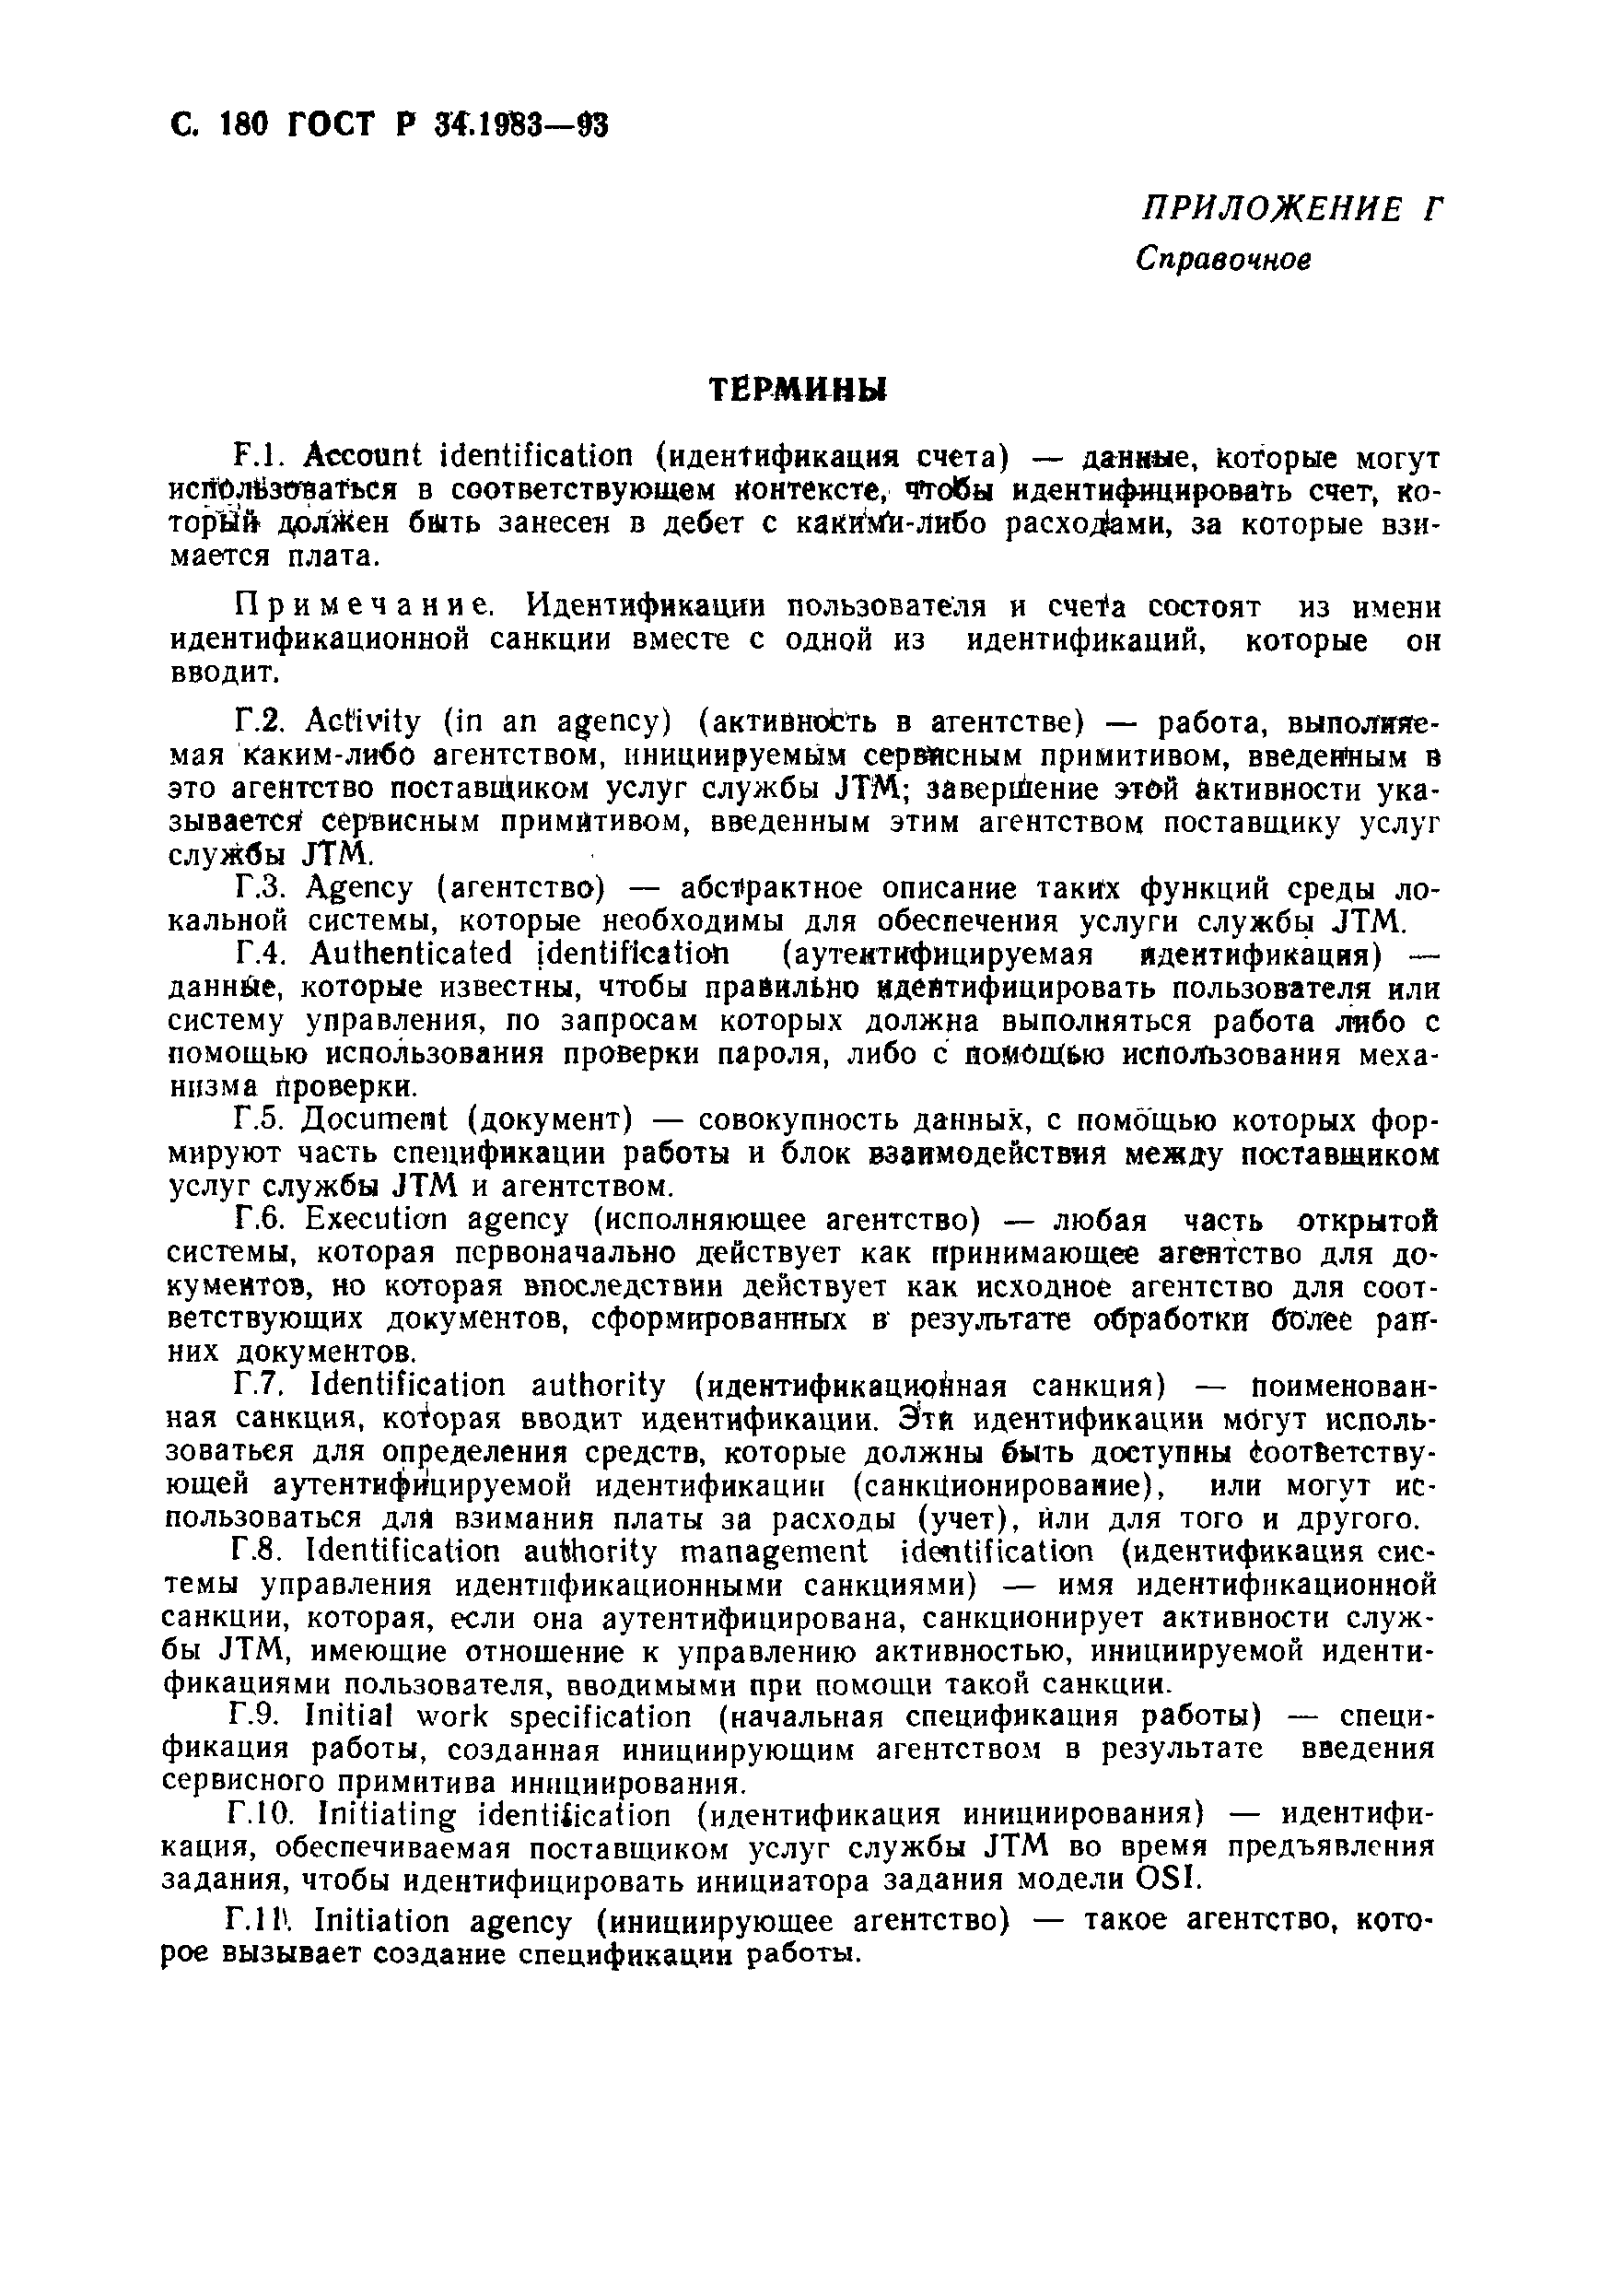 ГОСТ Р 34.1983-93. Страница 181